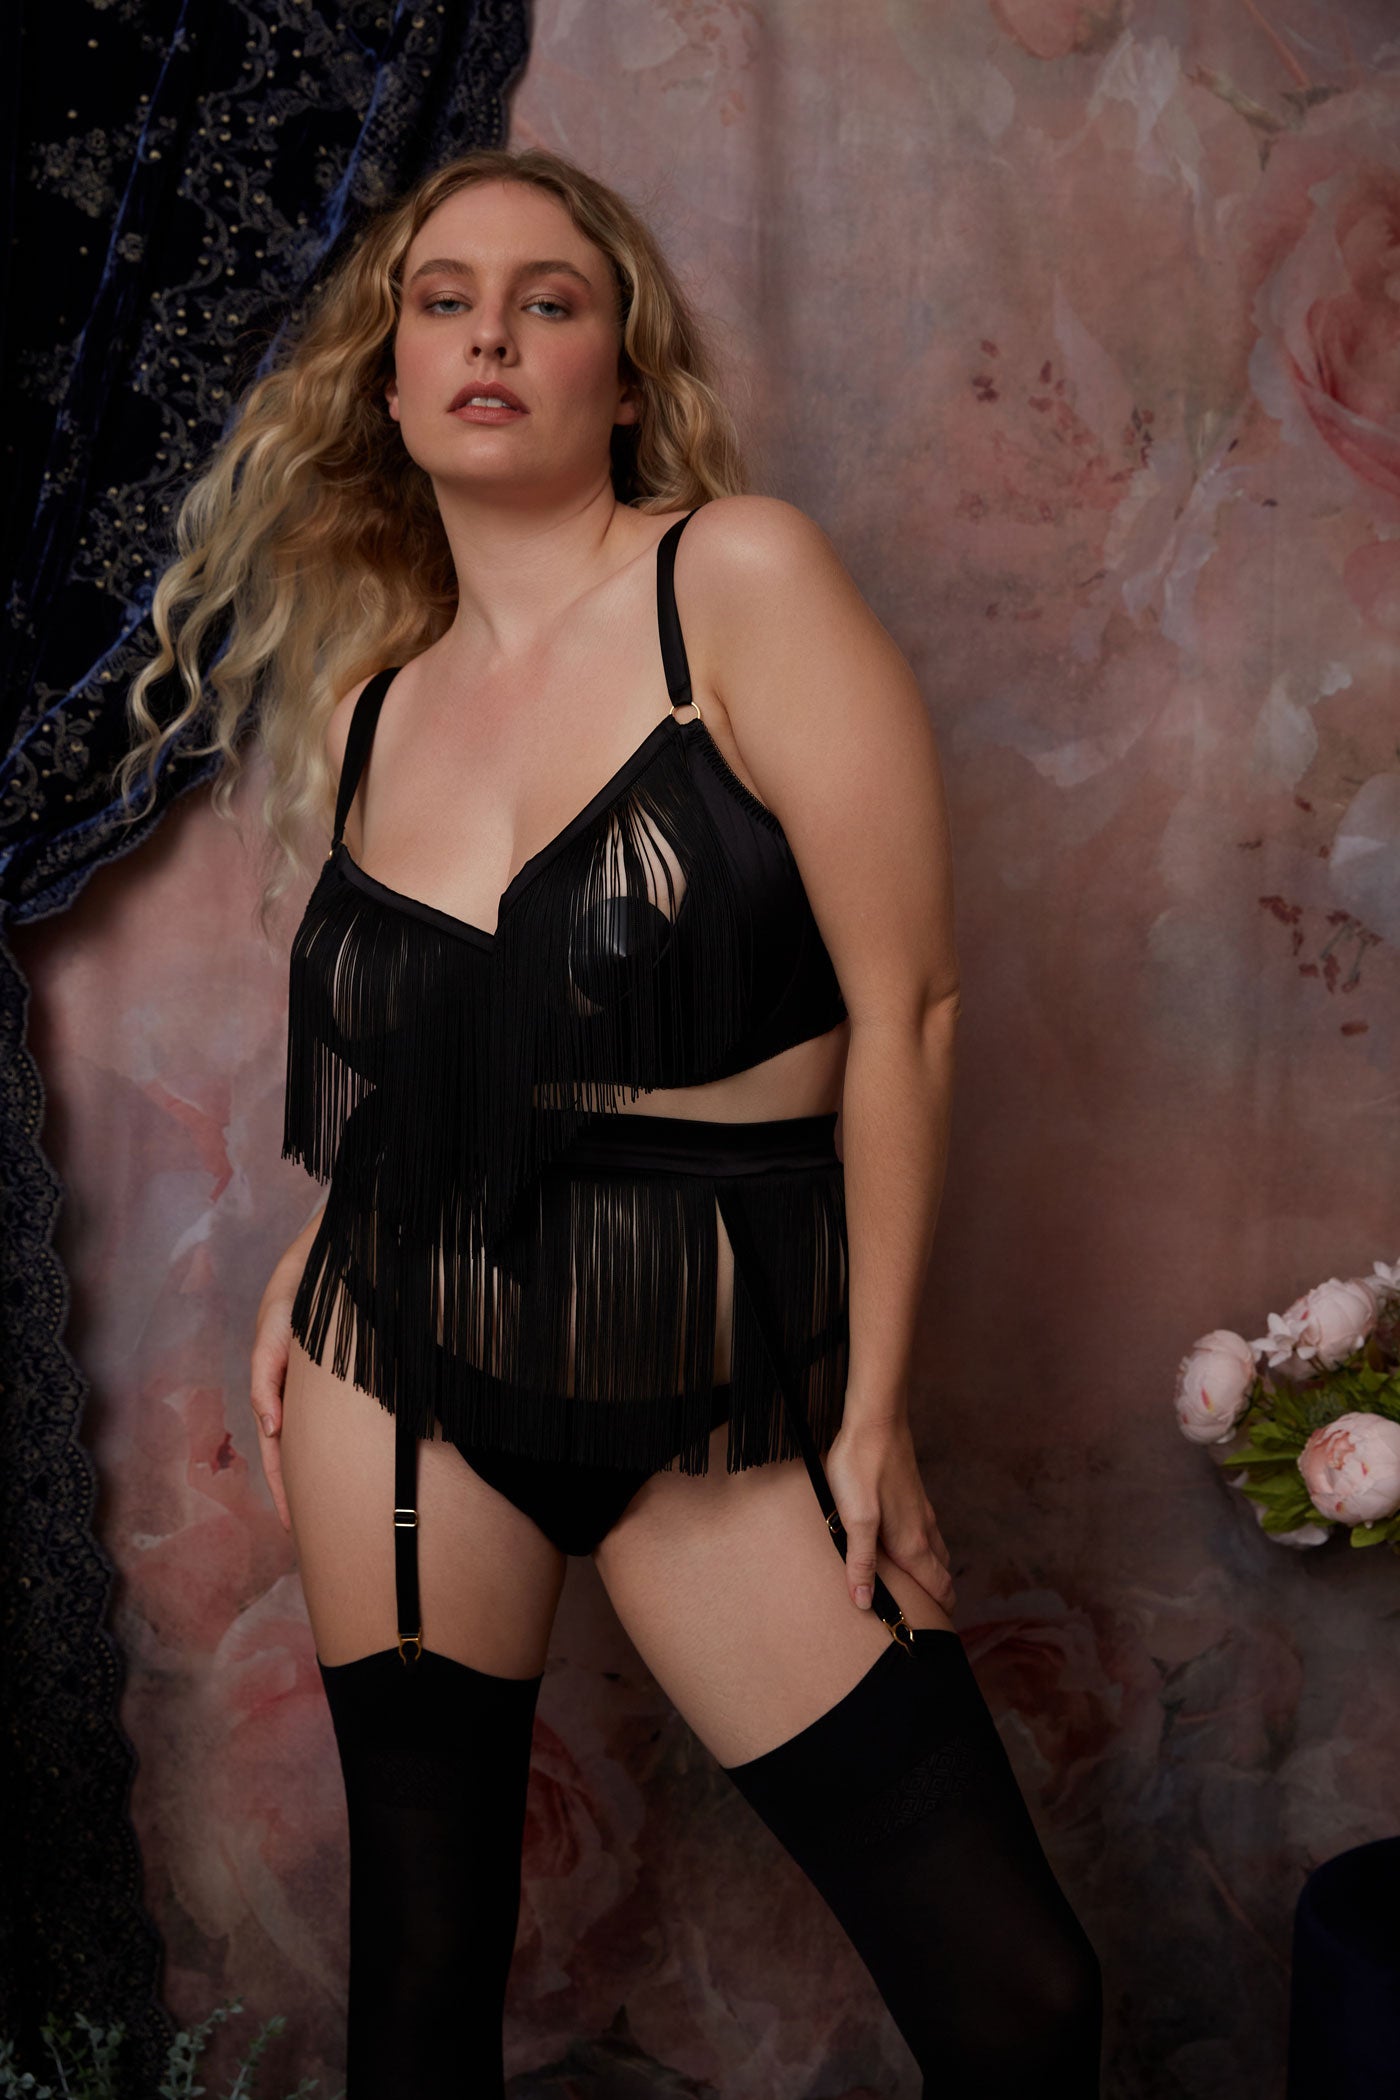 Black fringed garter belt and open cup bra boudoir lingerie set